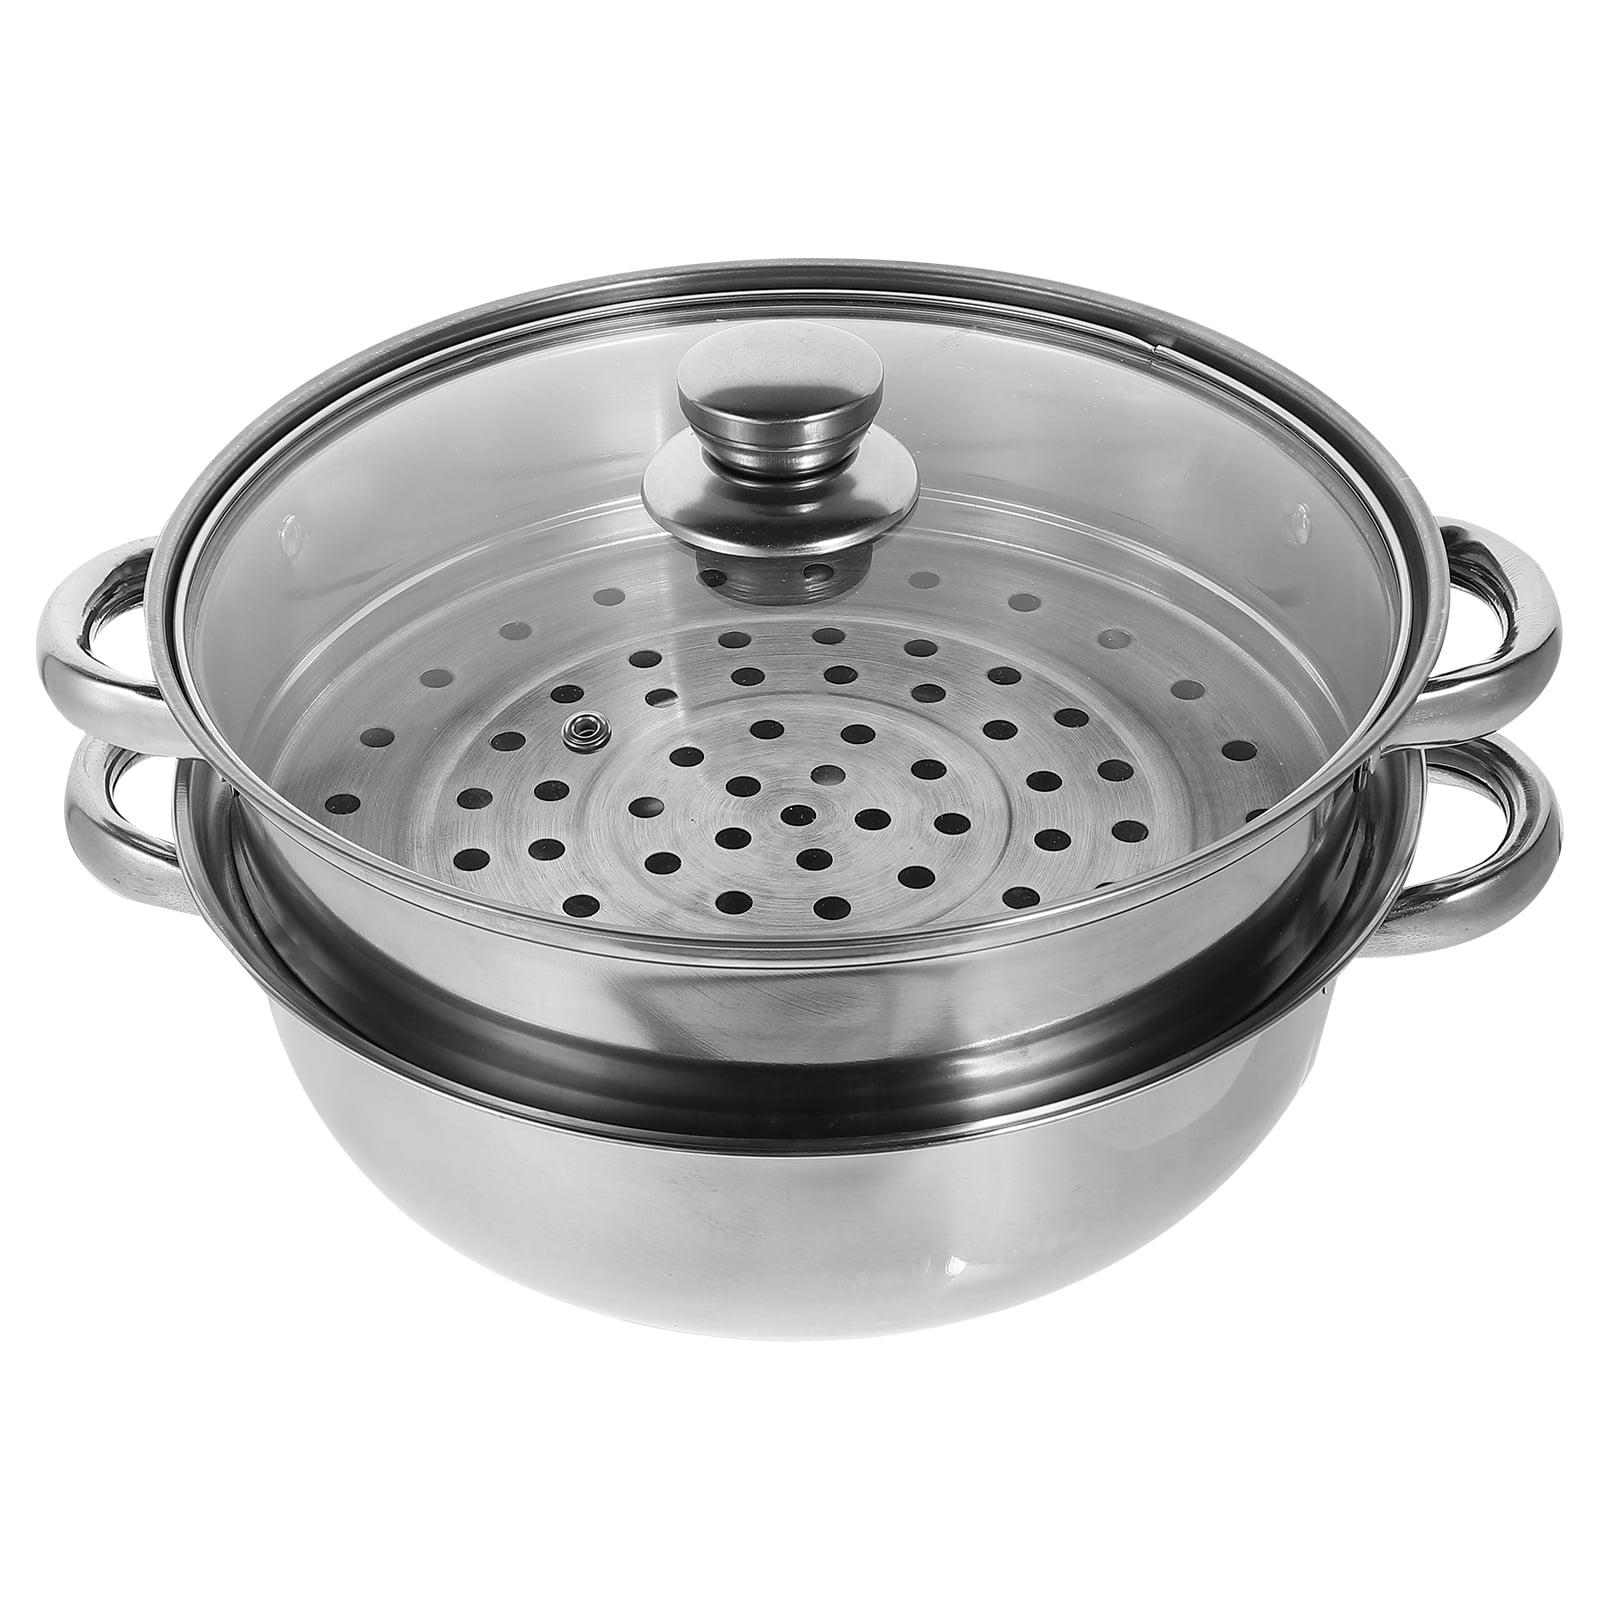 Stainless Steel Food Steamer Basket  Stainless Steel Cooking Utensils -  Kitchen - Aliexpress